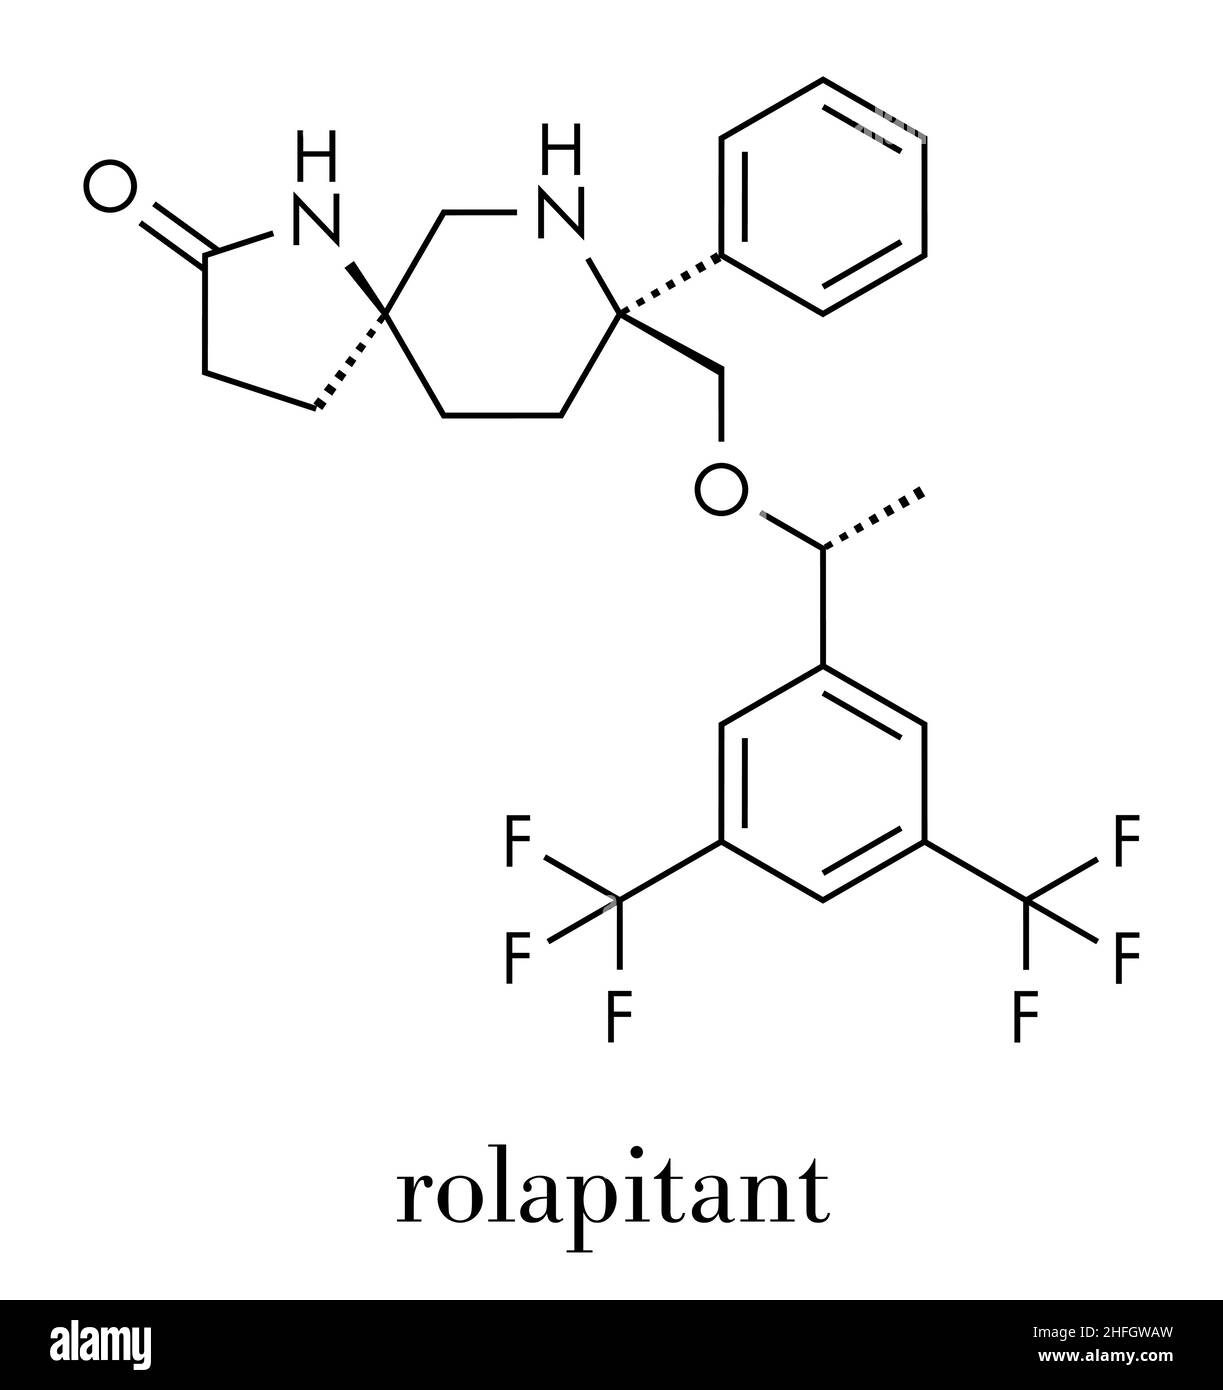 Rolapitant antiemetic drug molecule. Skeletal formula. Stock Vector